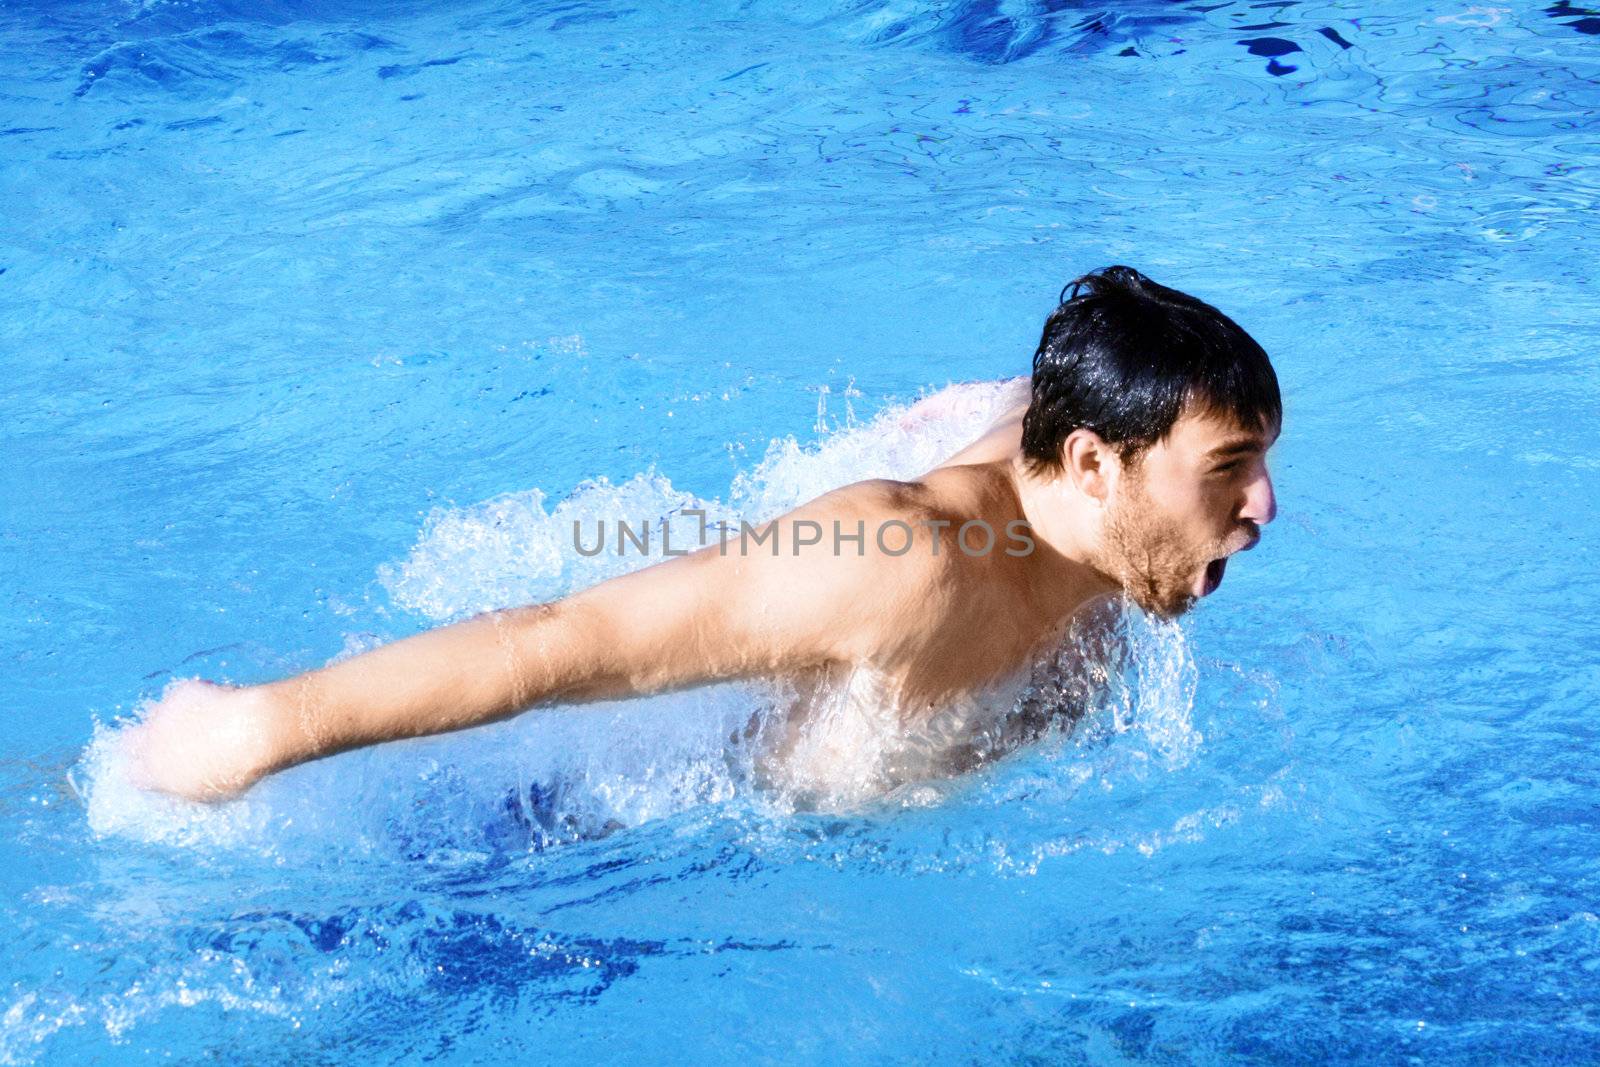 butterfly swimmer in pool by photochecker